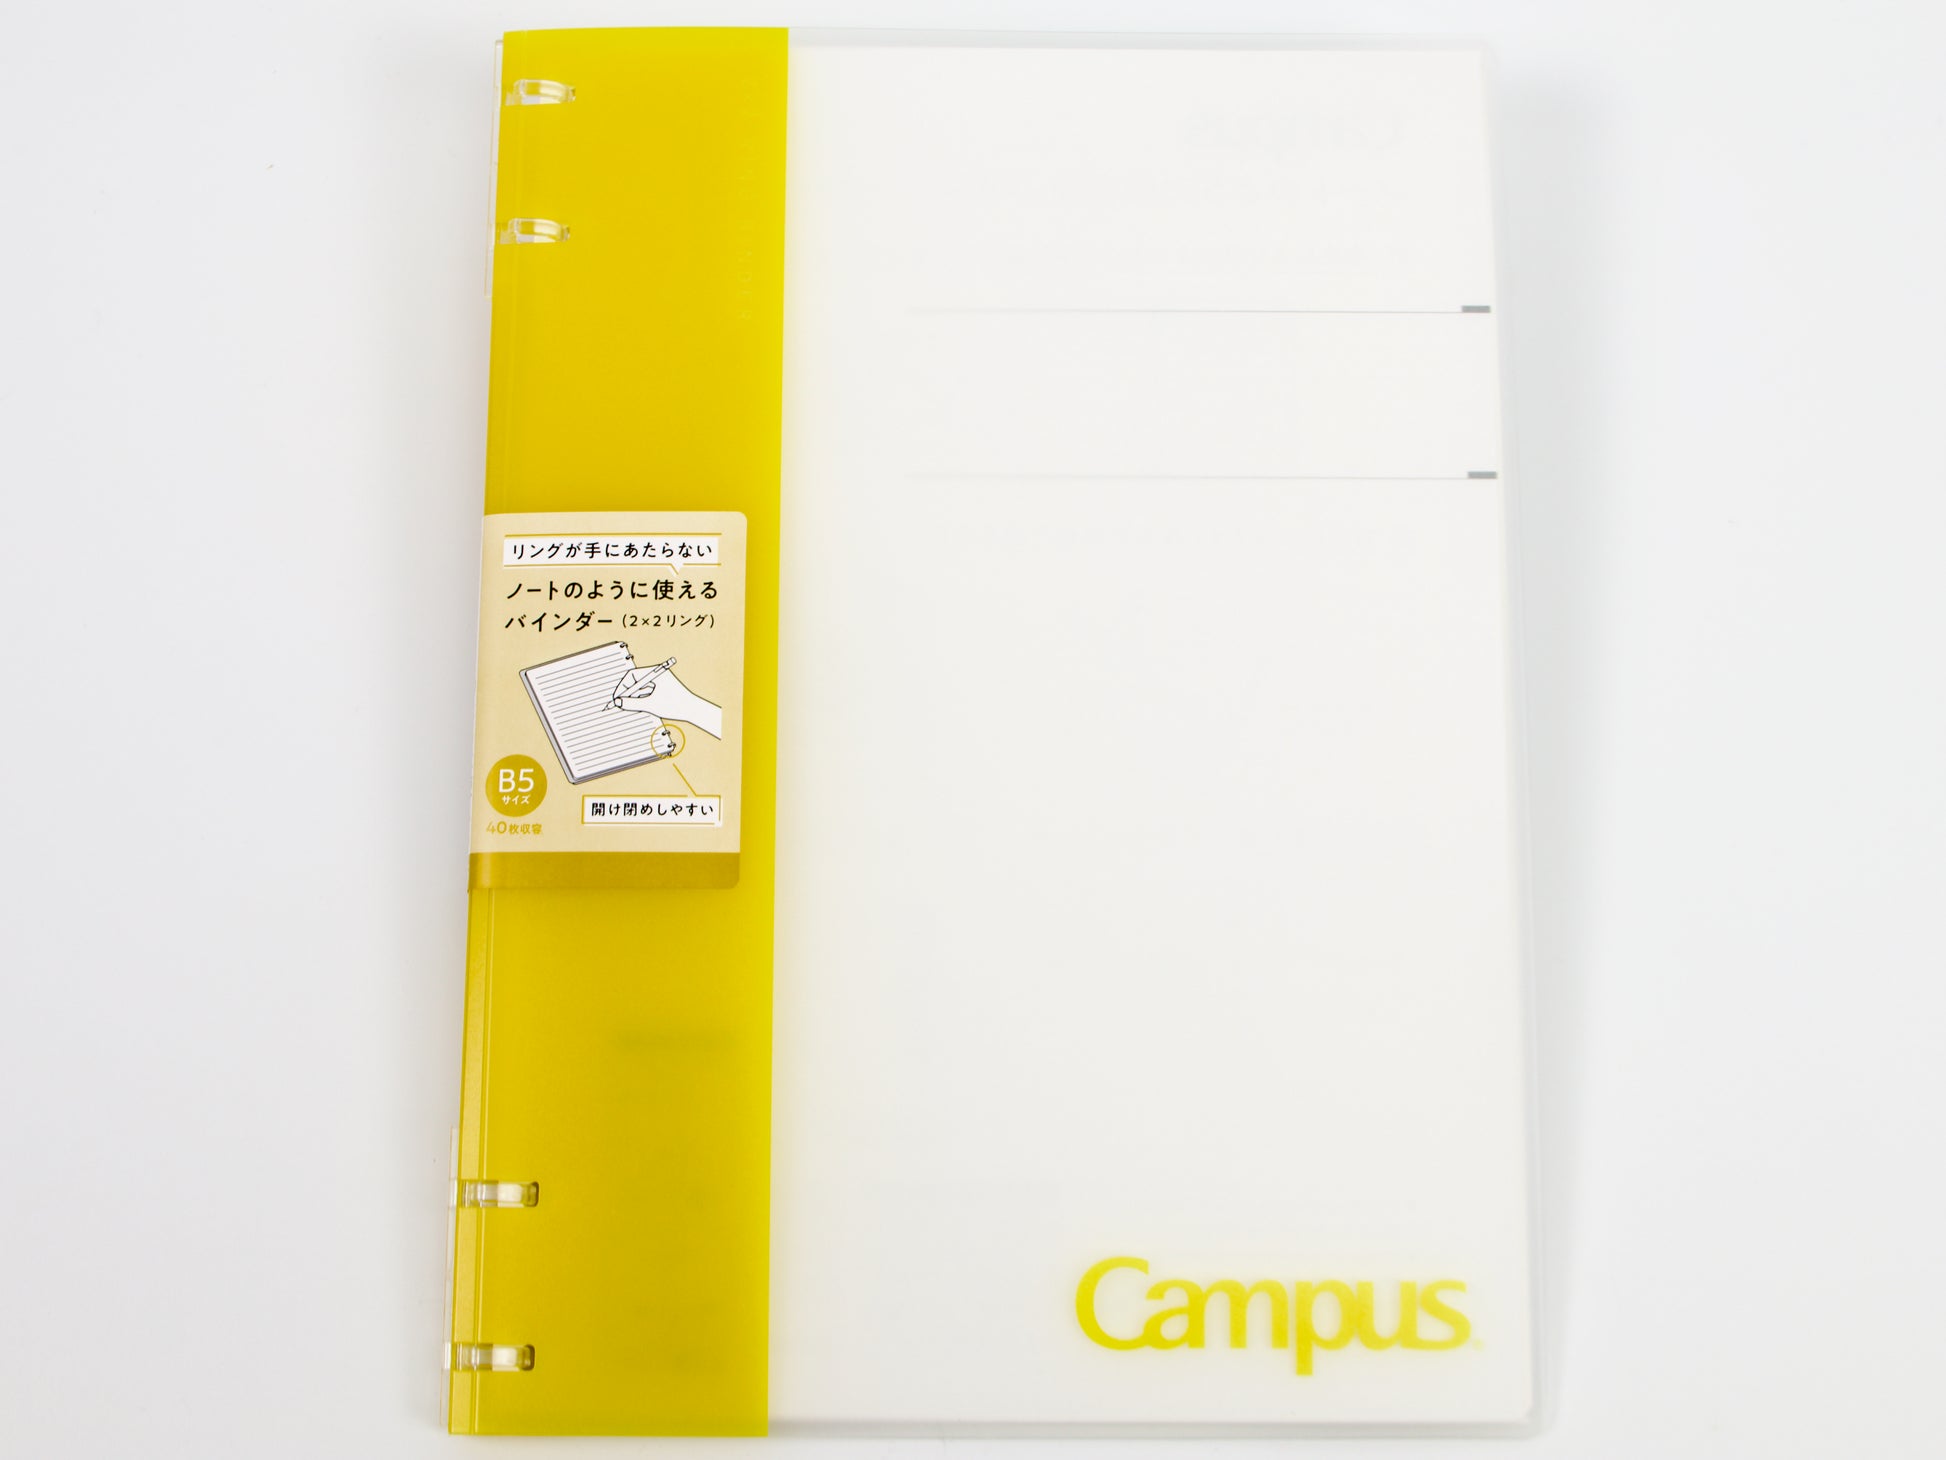 KOKUYO Campus Smart Ring Binder Notebook B5 A5 Study Supplies Writing  Journal Japanese Stationery -  Portugal